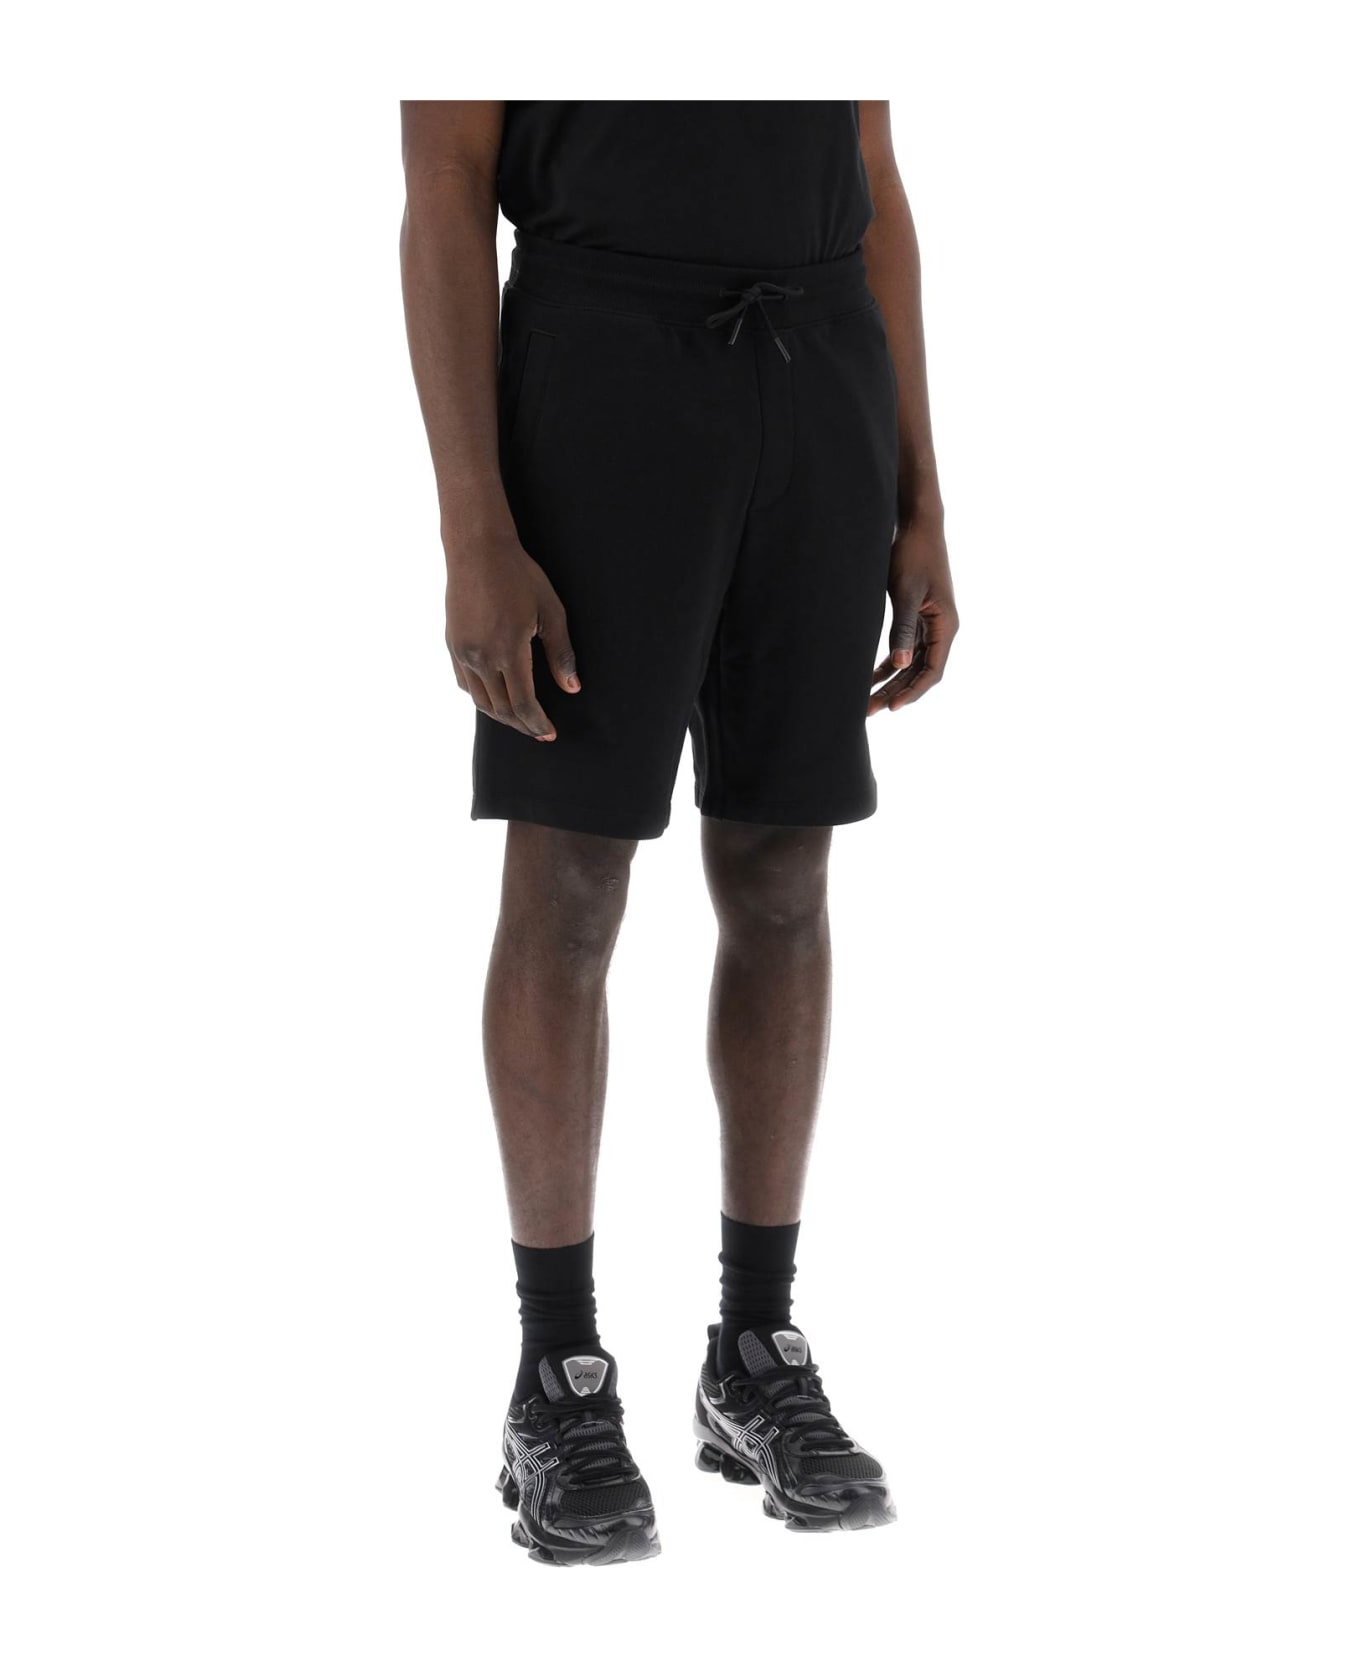 Hugo Boss Diz Sweat Shorts - BLACK 009 (Black)